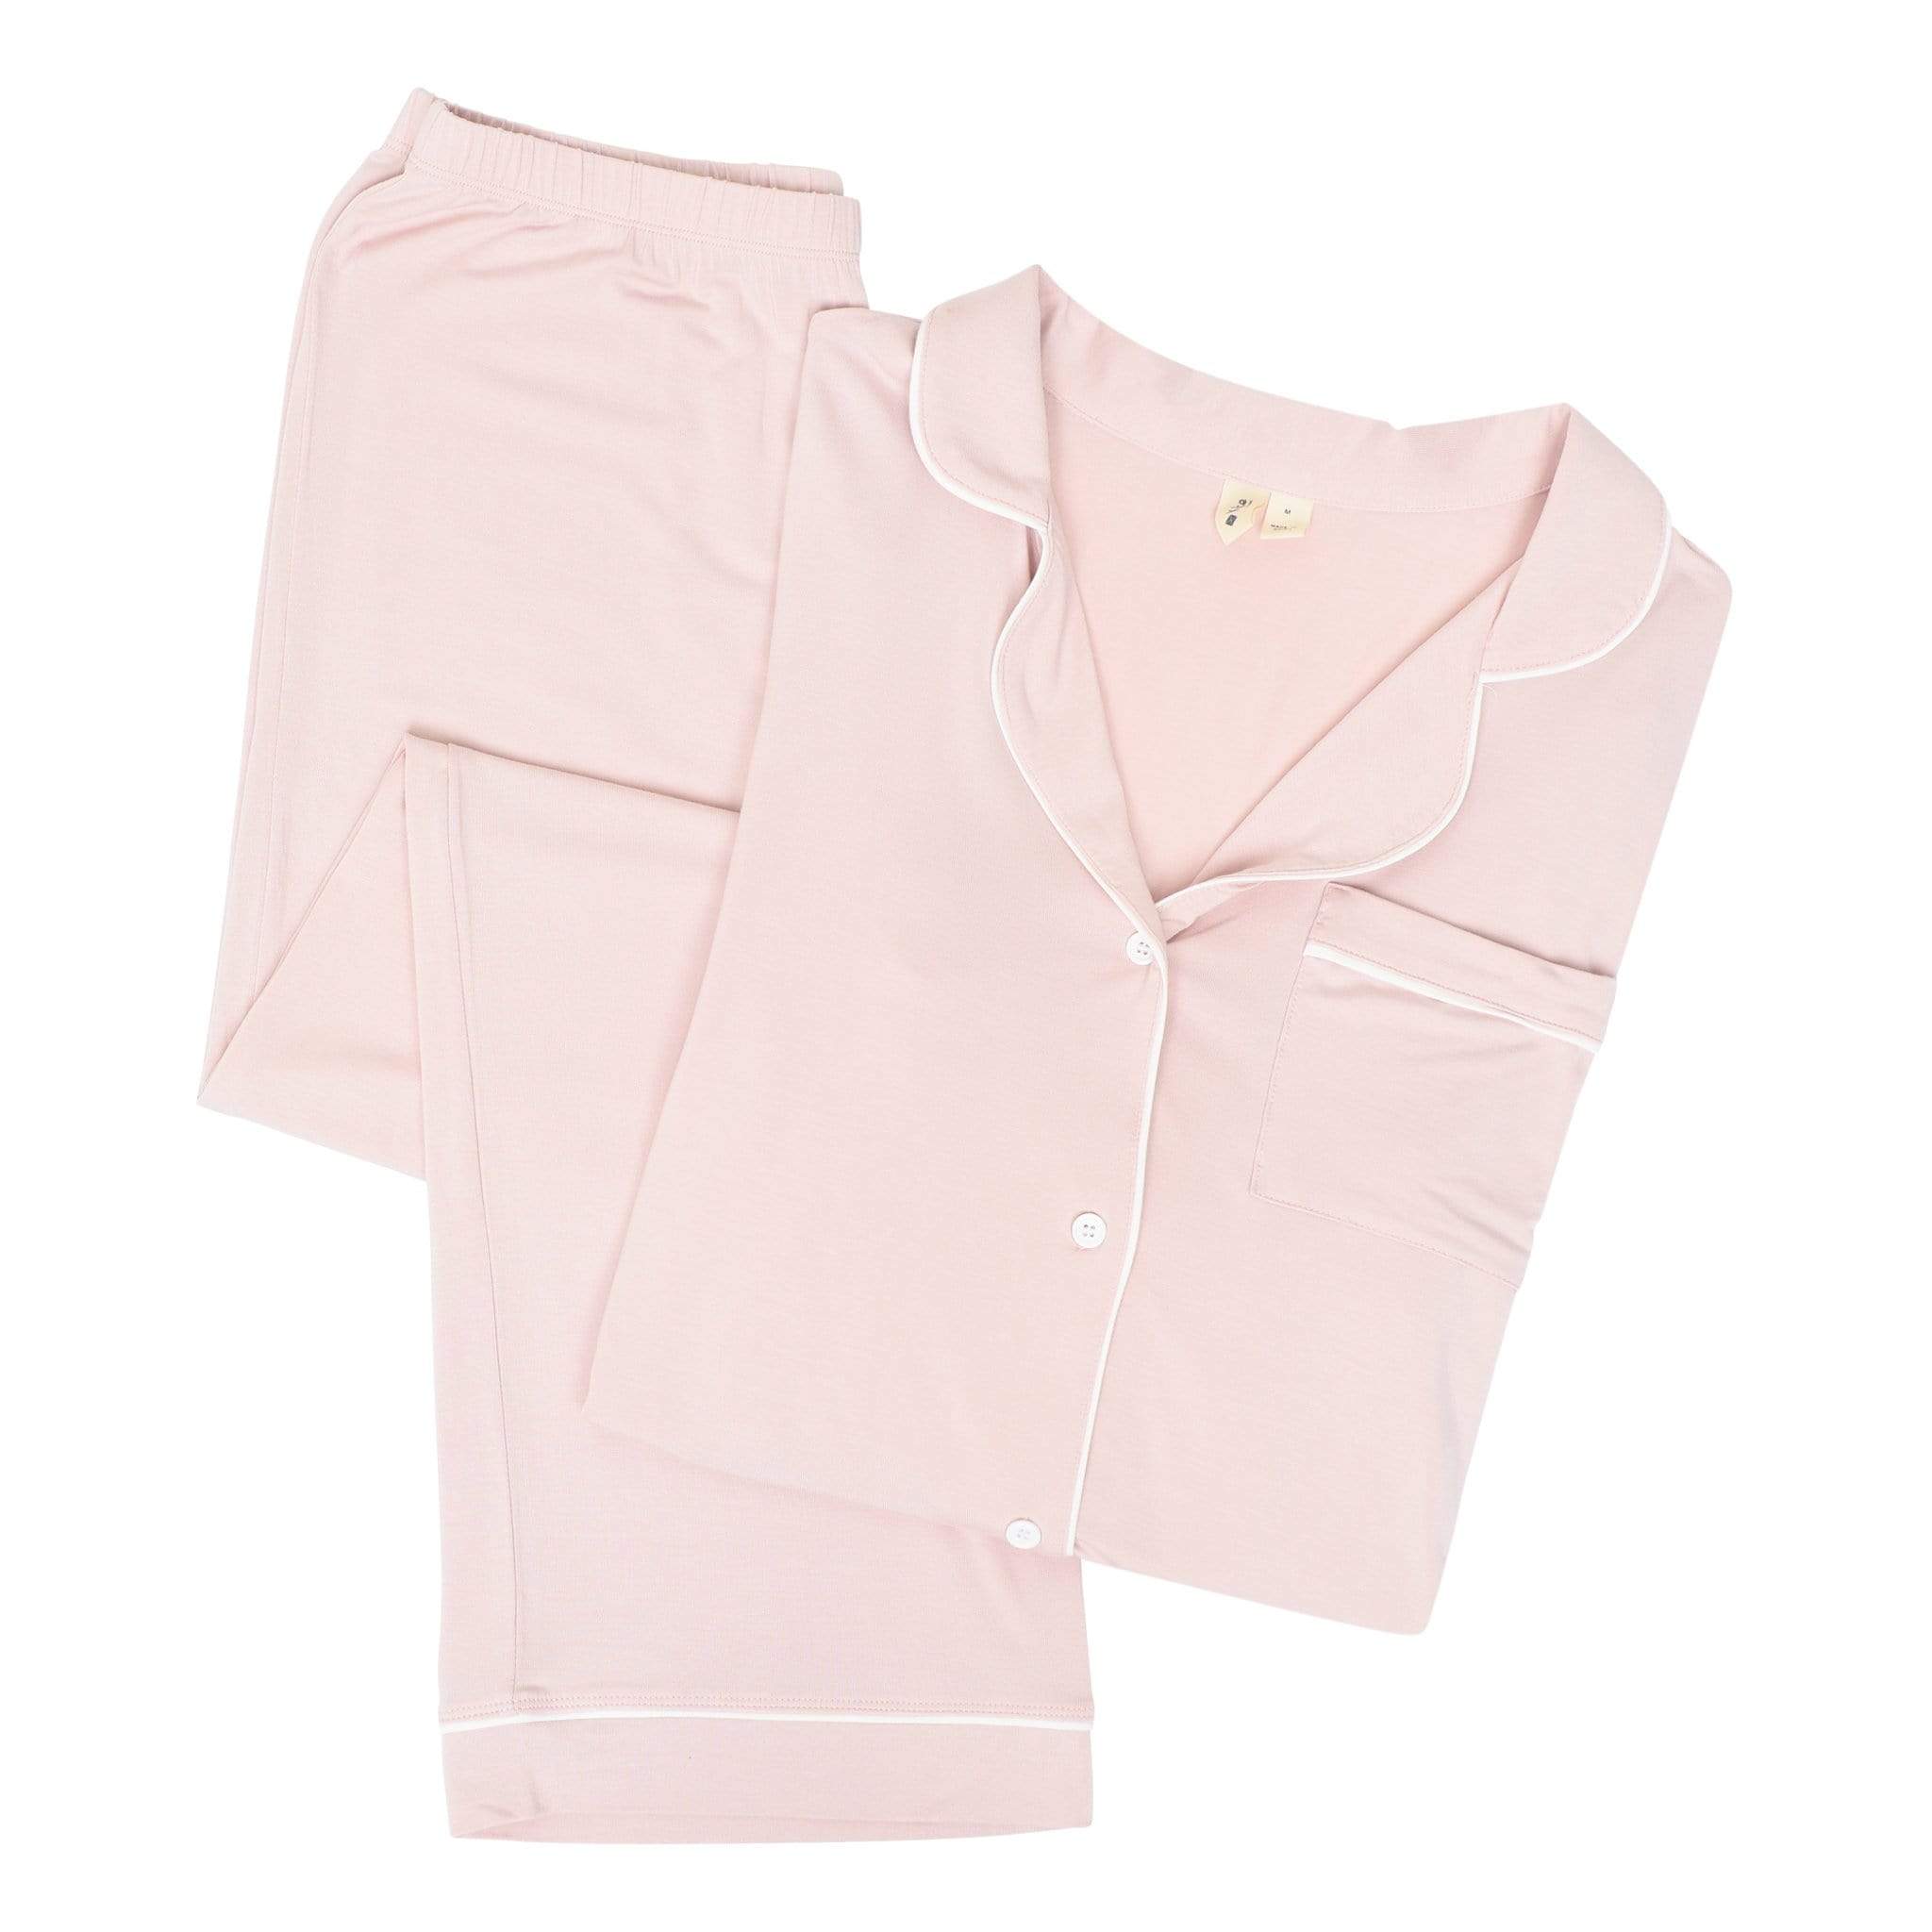 Kyte Baby Women's Long Sleeve Pajama Set in Blush with Cloud Trim